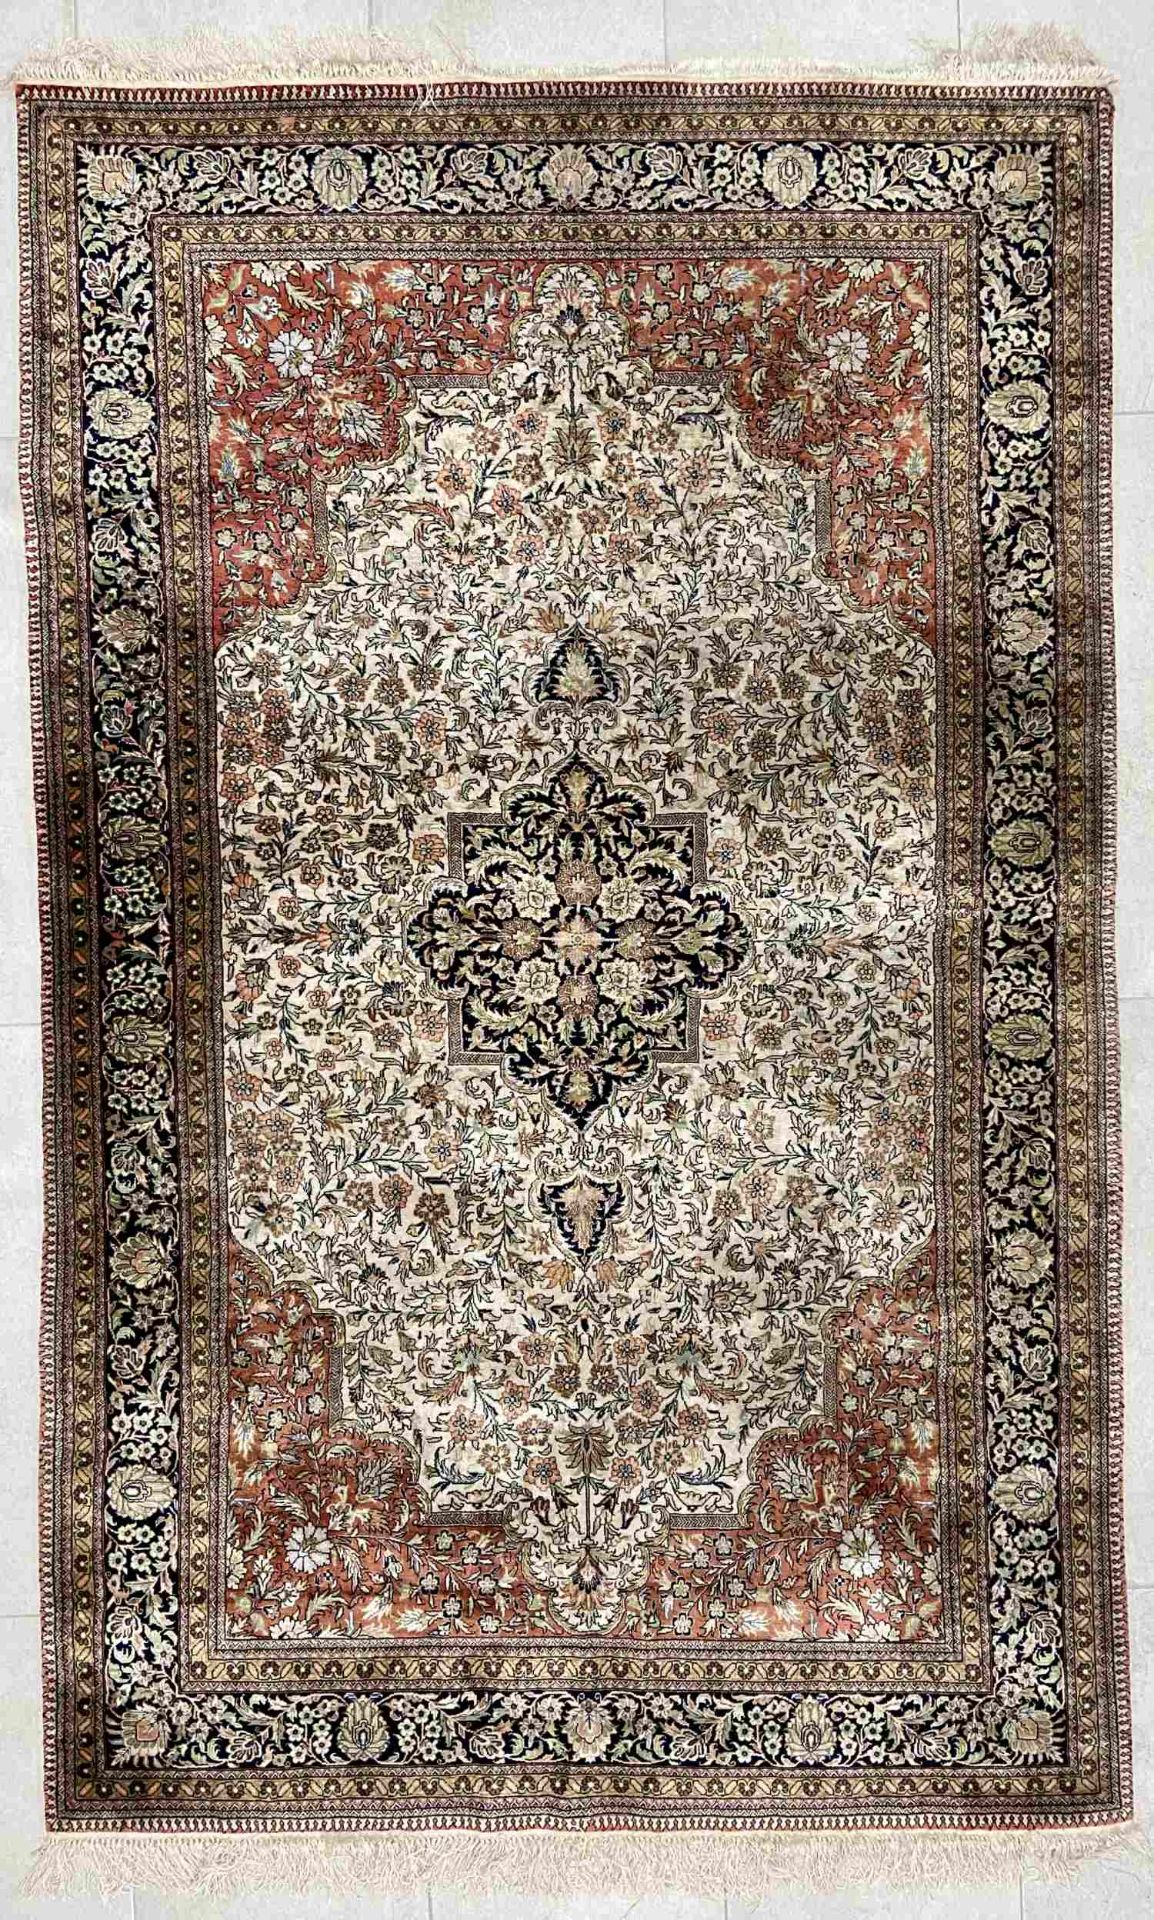 Handknotted oriental silk carpet, Kashmir - 250 x 155cm